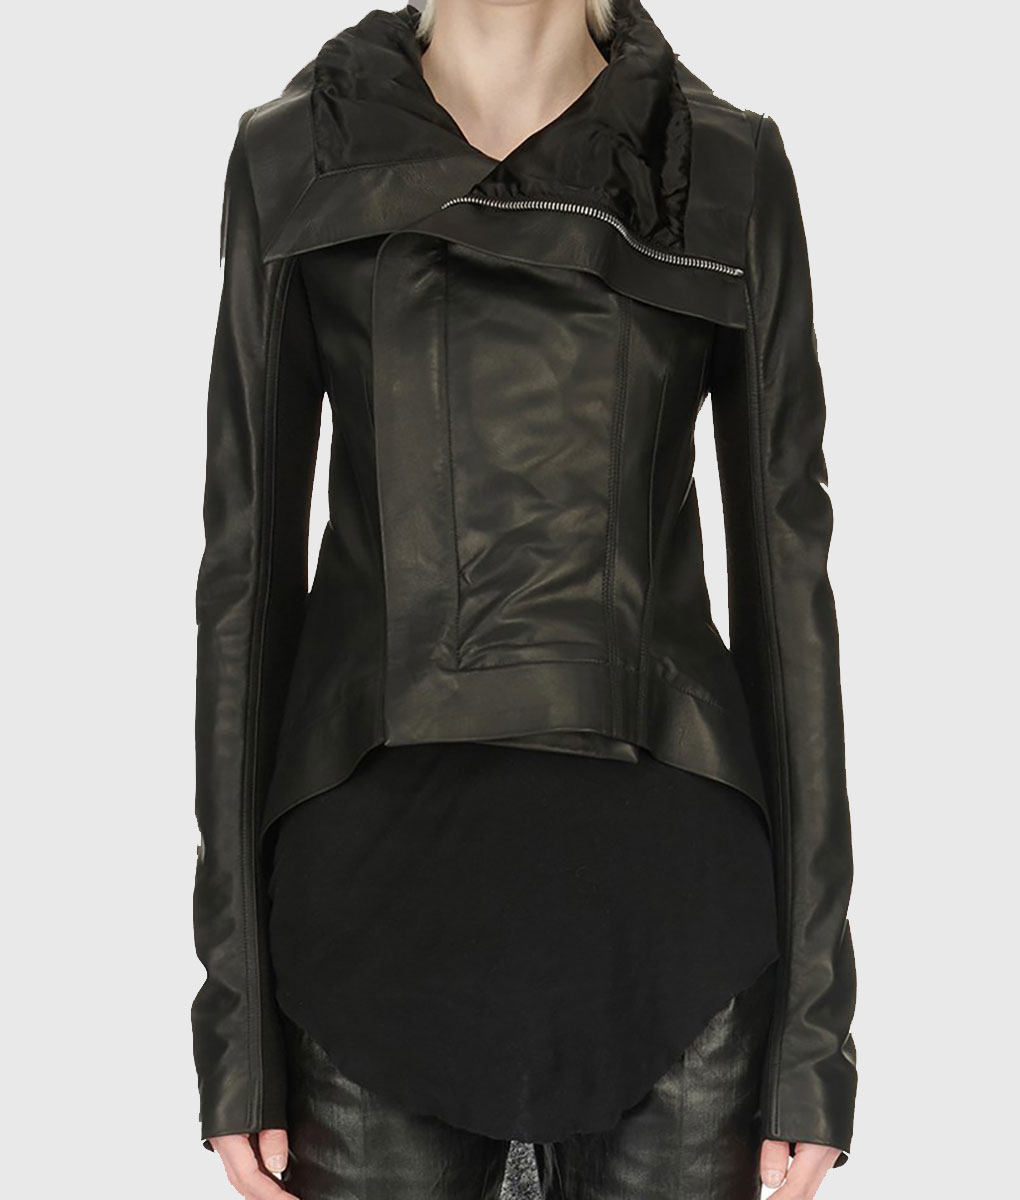 Taylor Swift Owens Black Leather Jacket (3)